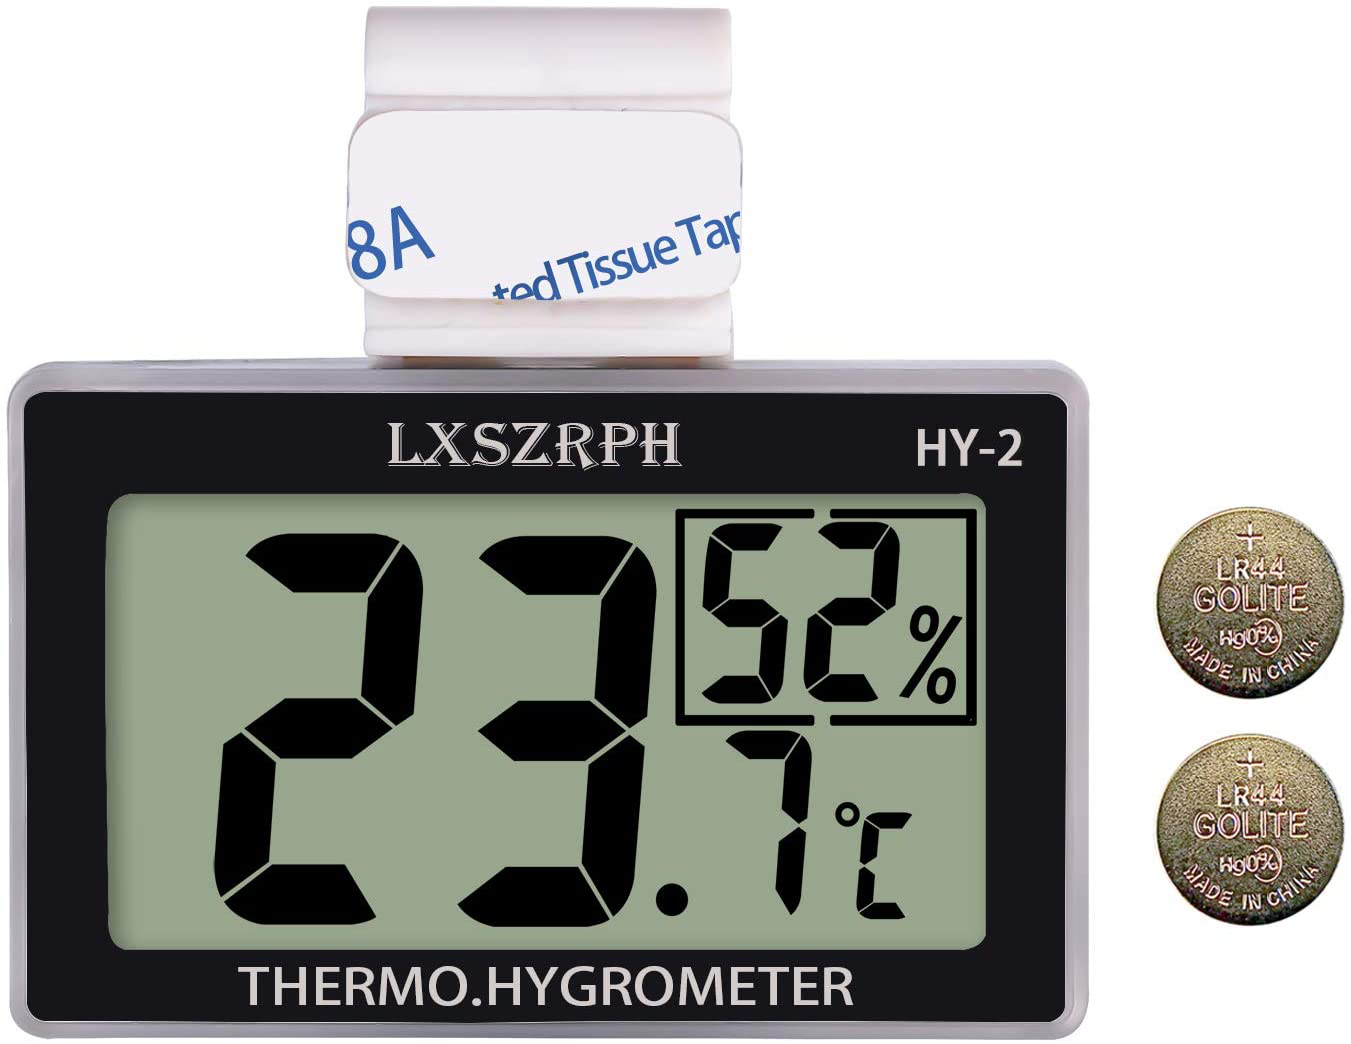 capetsma Reptile Thermometer, Digital Thermometer Hygrometer for Reptile Terrarium, Temperature and Humidity Monitor in Acrylic